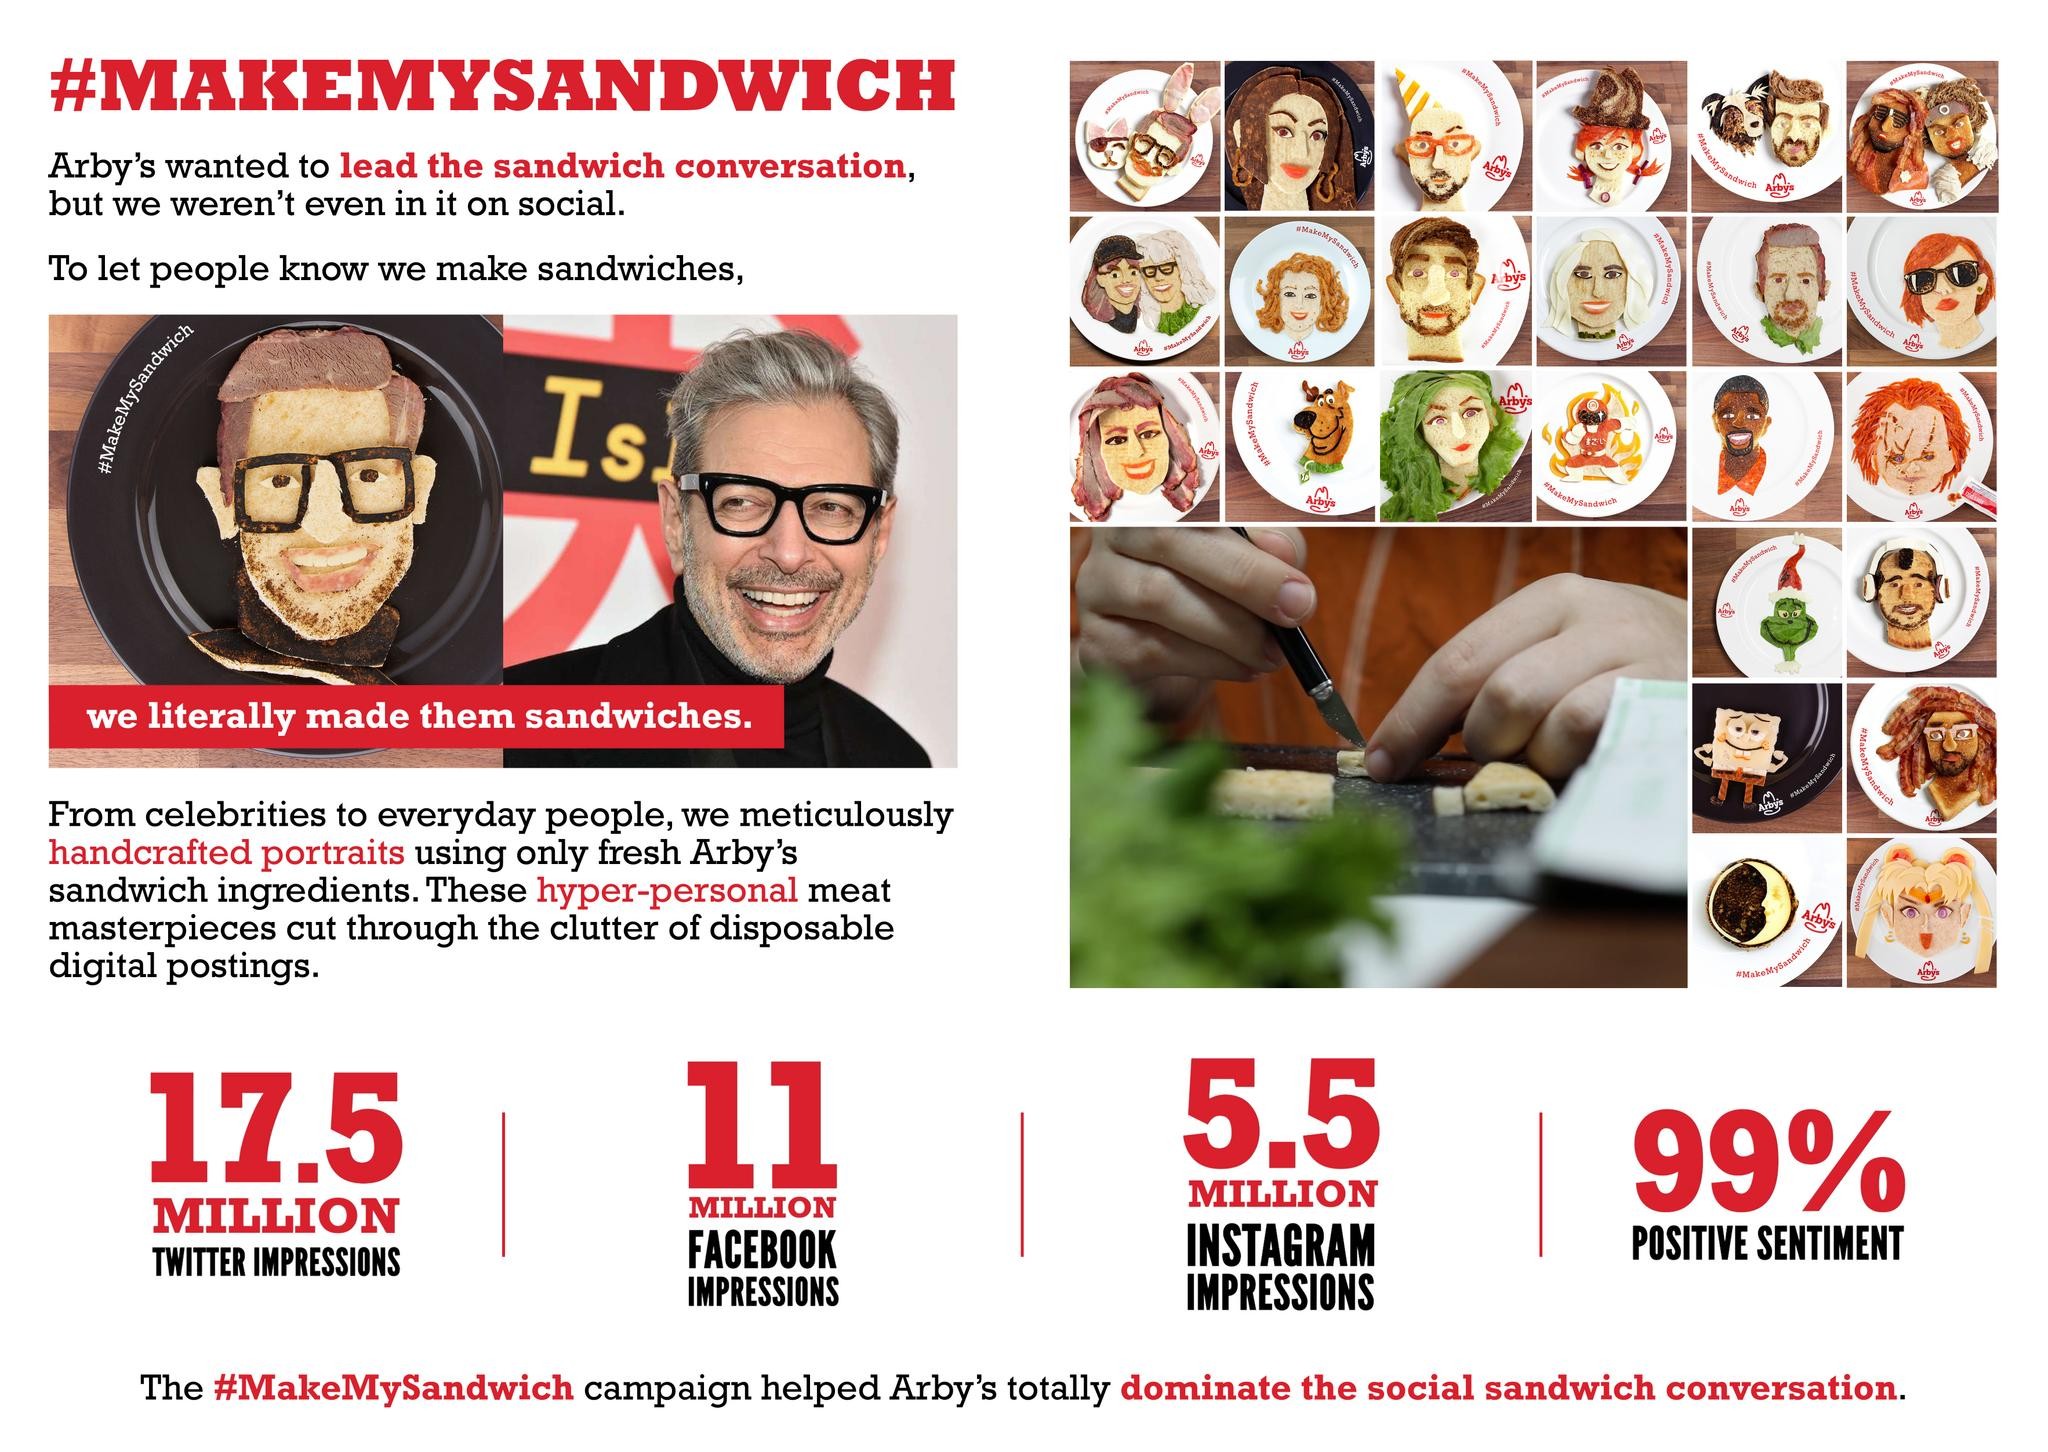 Arby’s #MakeMySandwich: A Portrait of Social Success